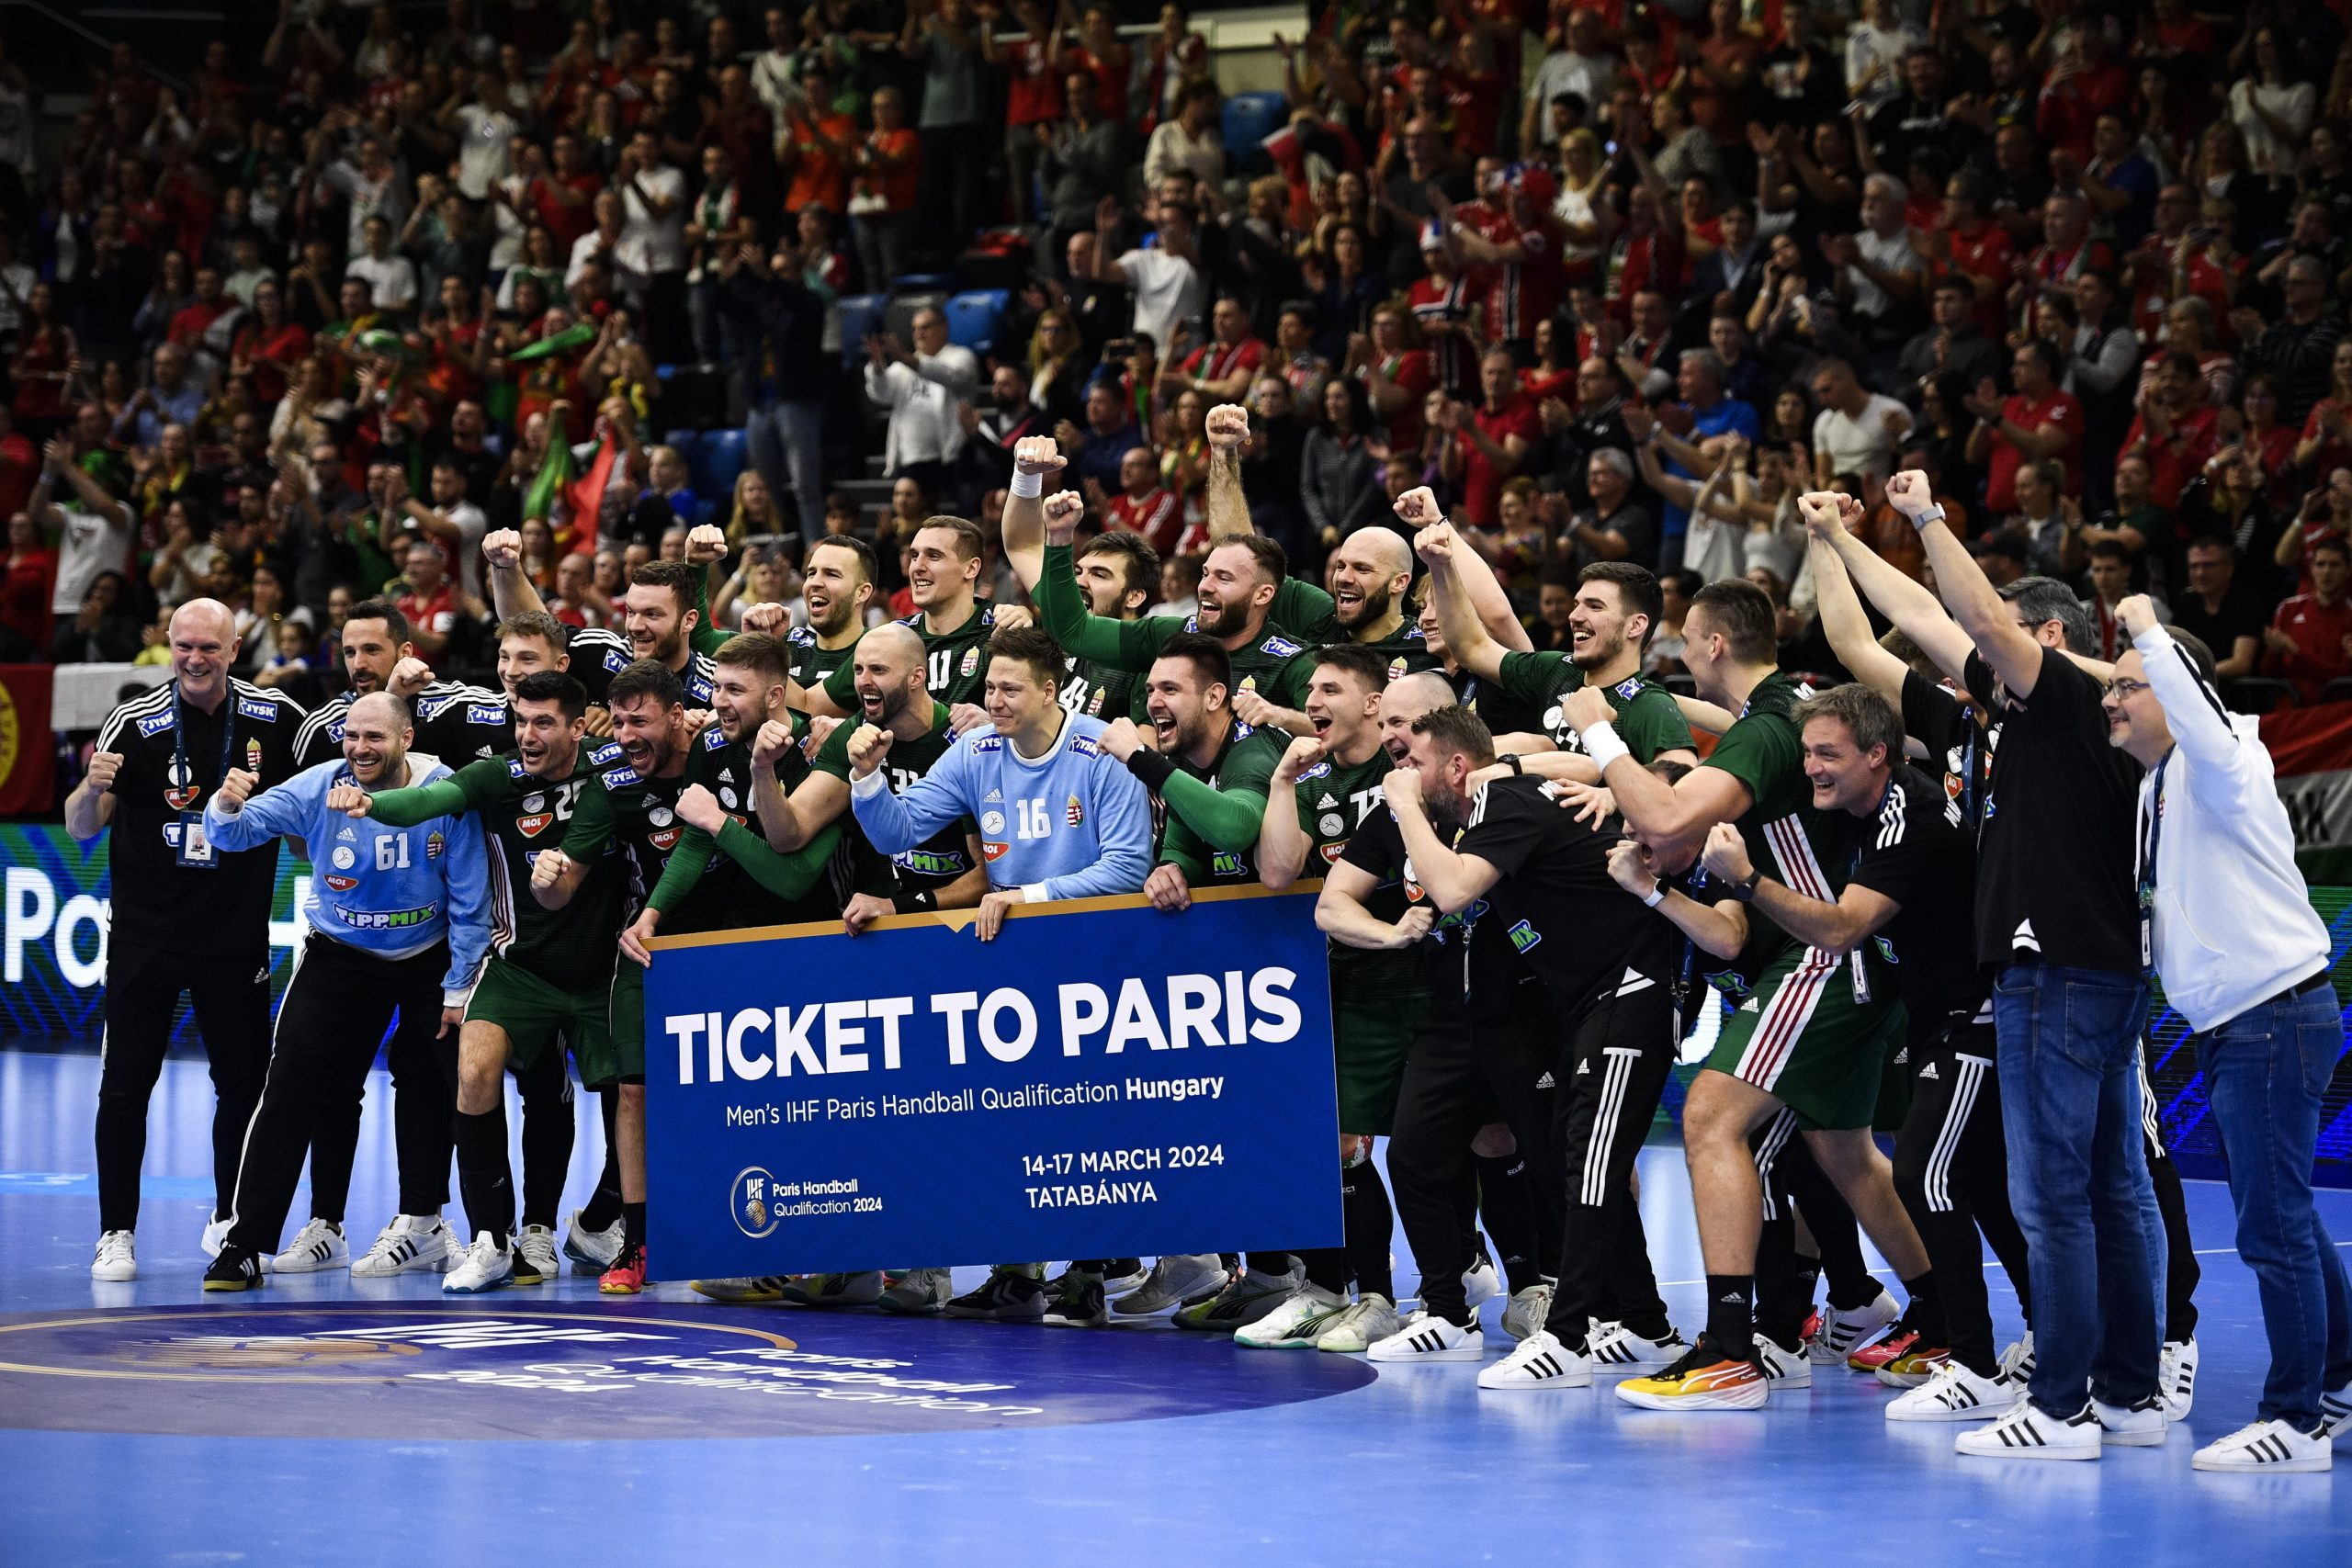 Men’s Handball Team Qualifies for Paris Olympics